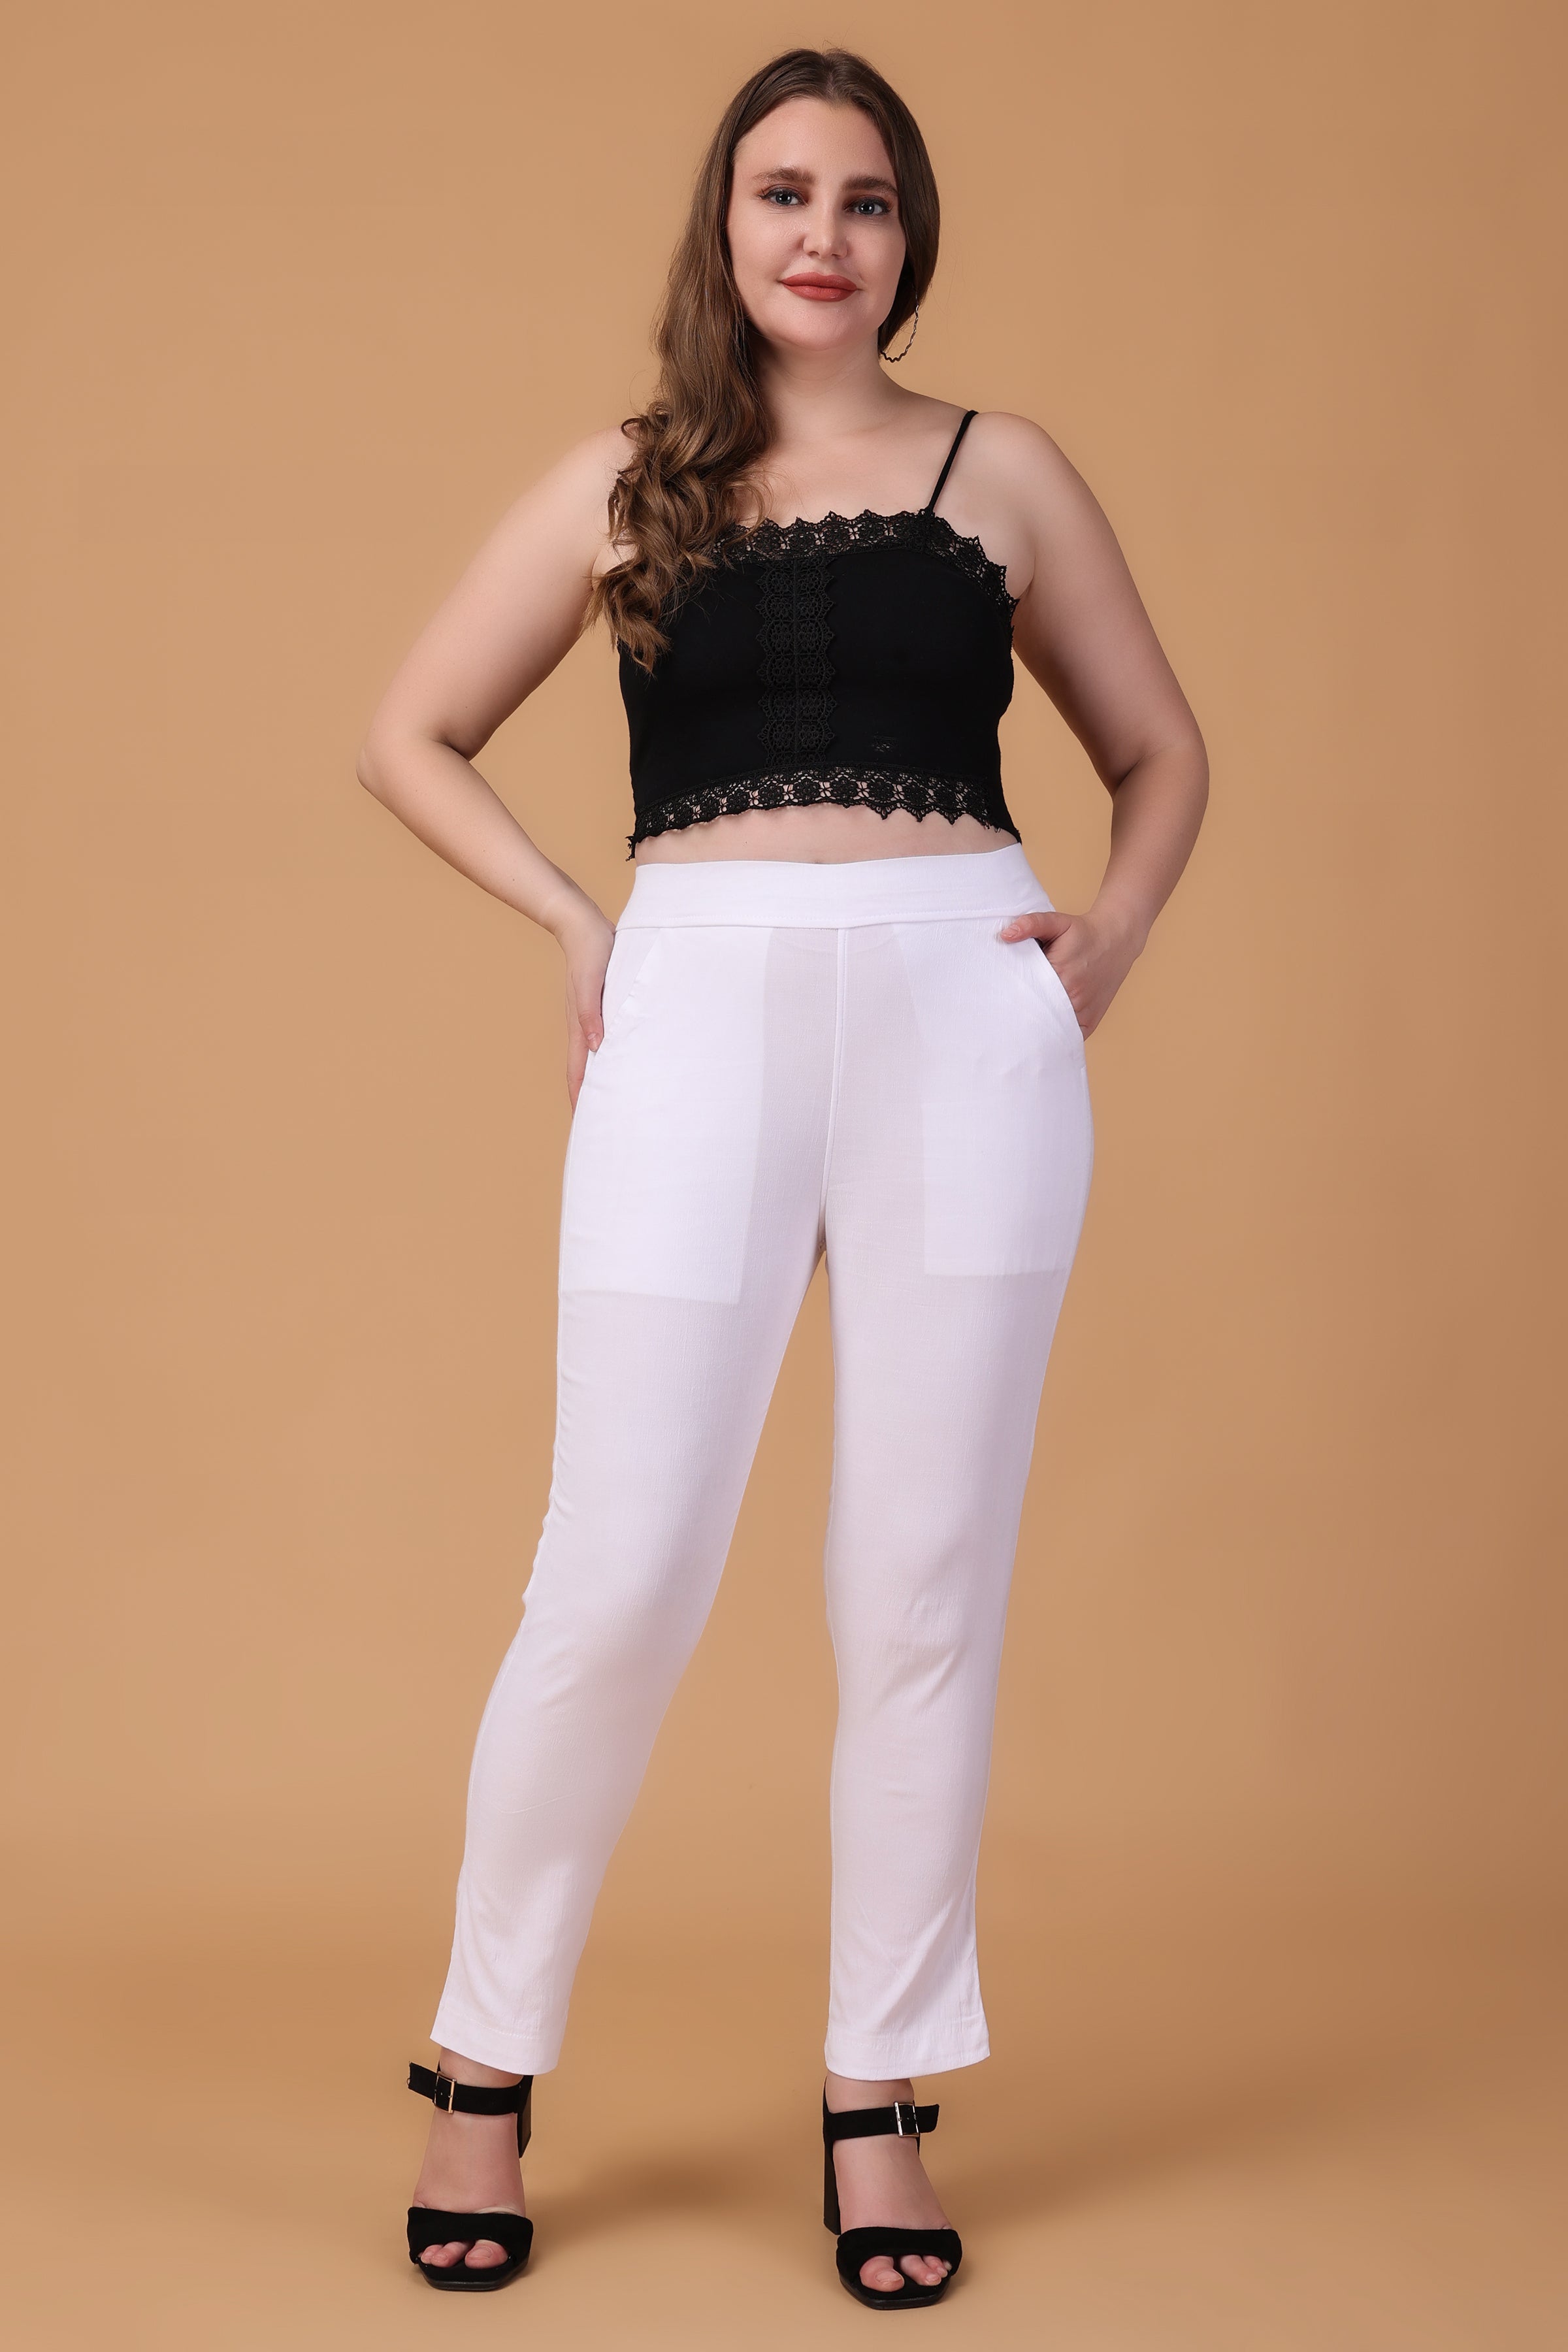 White Pants For Women Best Summer Looks 2019 | Womens fashion, Casual  fashion, Fashion